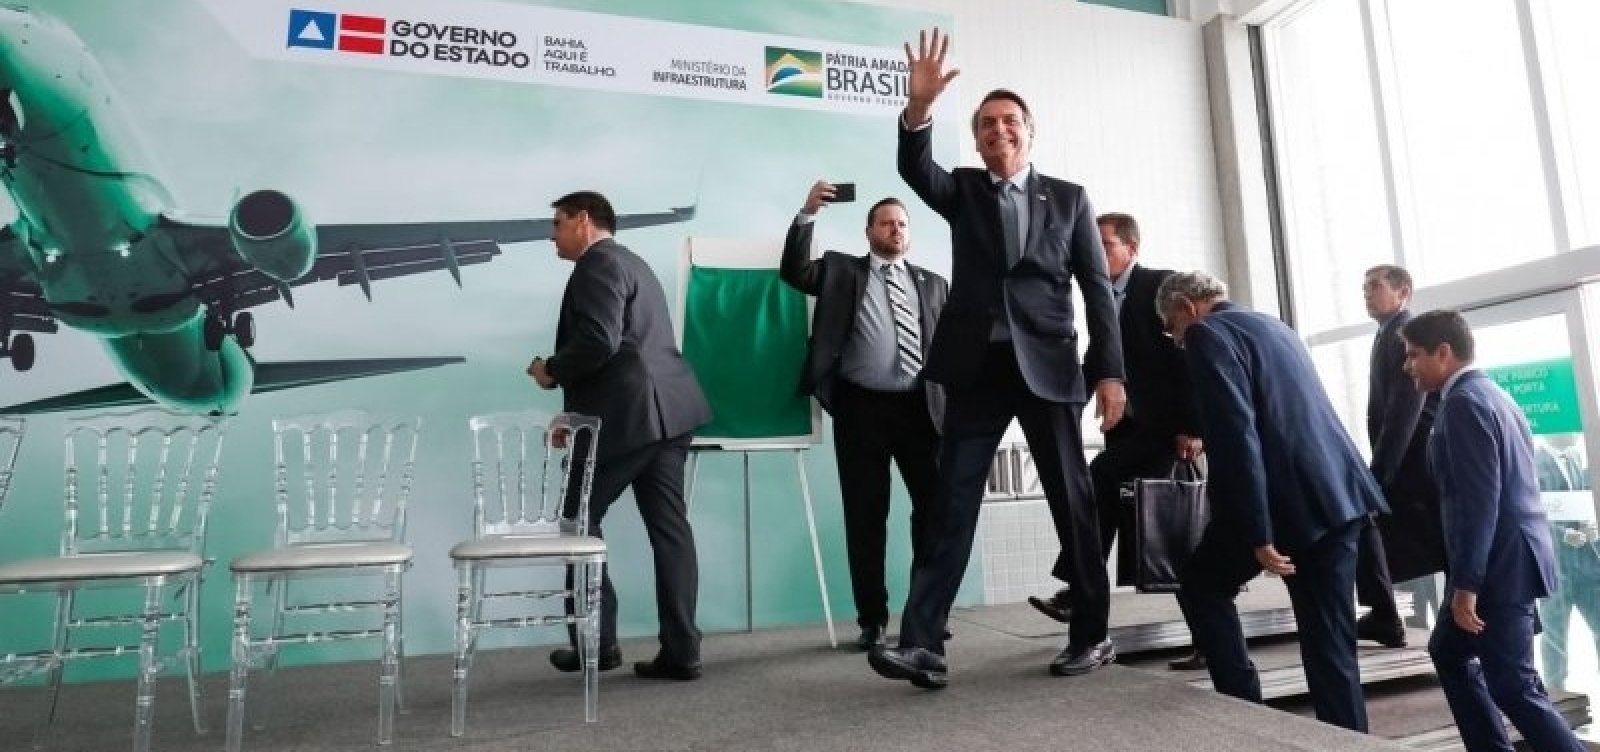 [Presidente Jair Bolsonaro confirma visita a Bahia no dia 10 de julho]